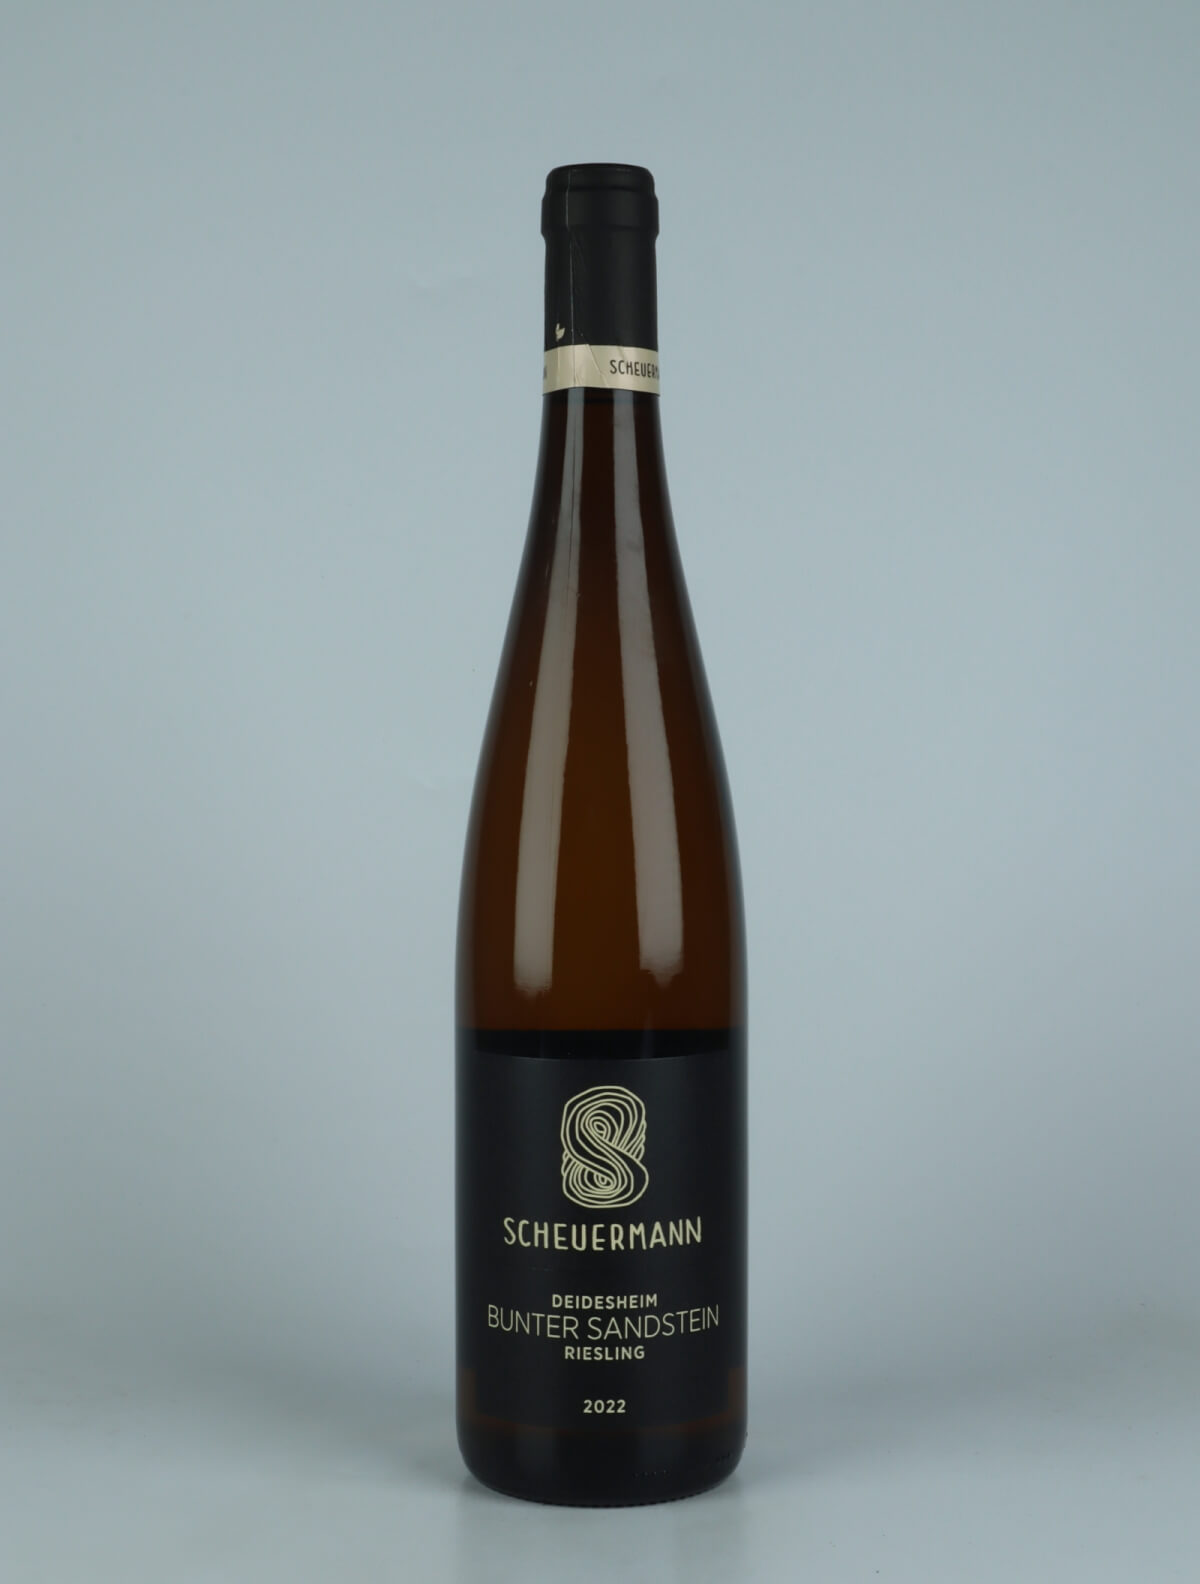 En flaske 2022 Riesling Bunter Sandstein Hvidvin fra Weingut Scheuermann, Pfalz i Tyskland